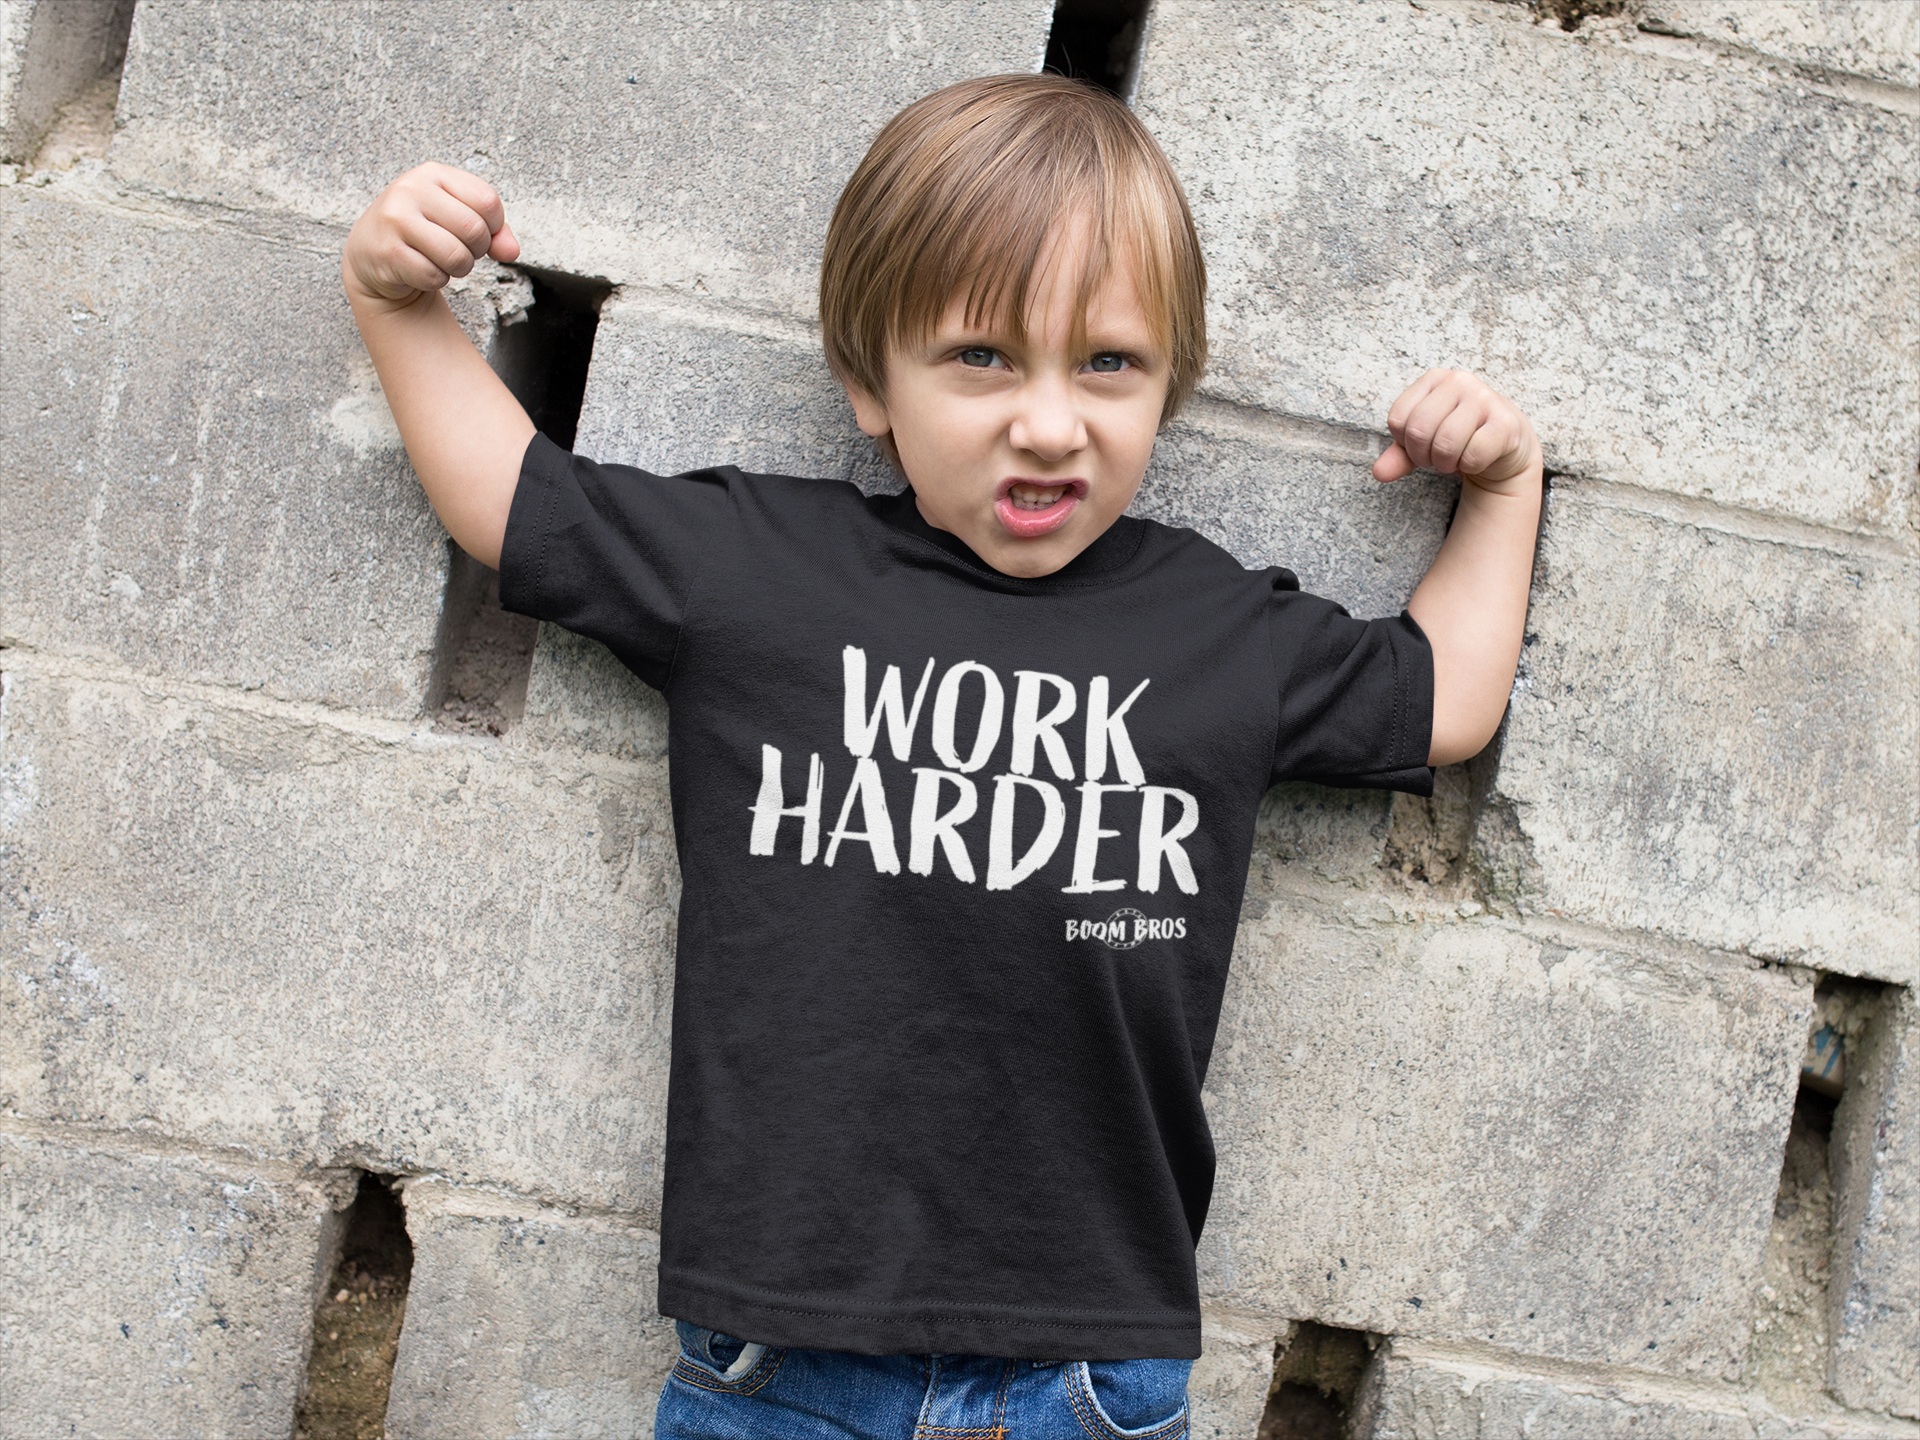 Work Harder Youth Short Sleeve T-Shirt